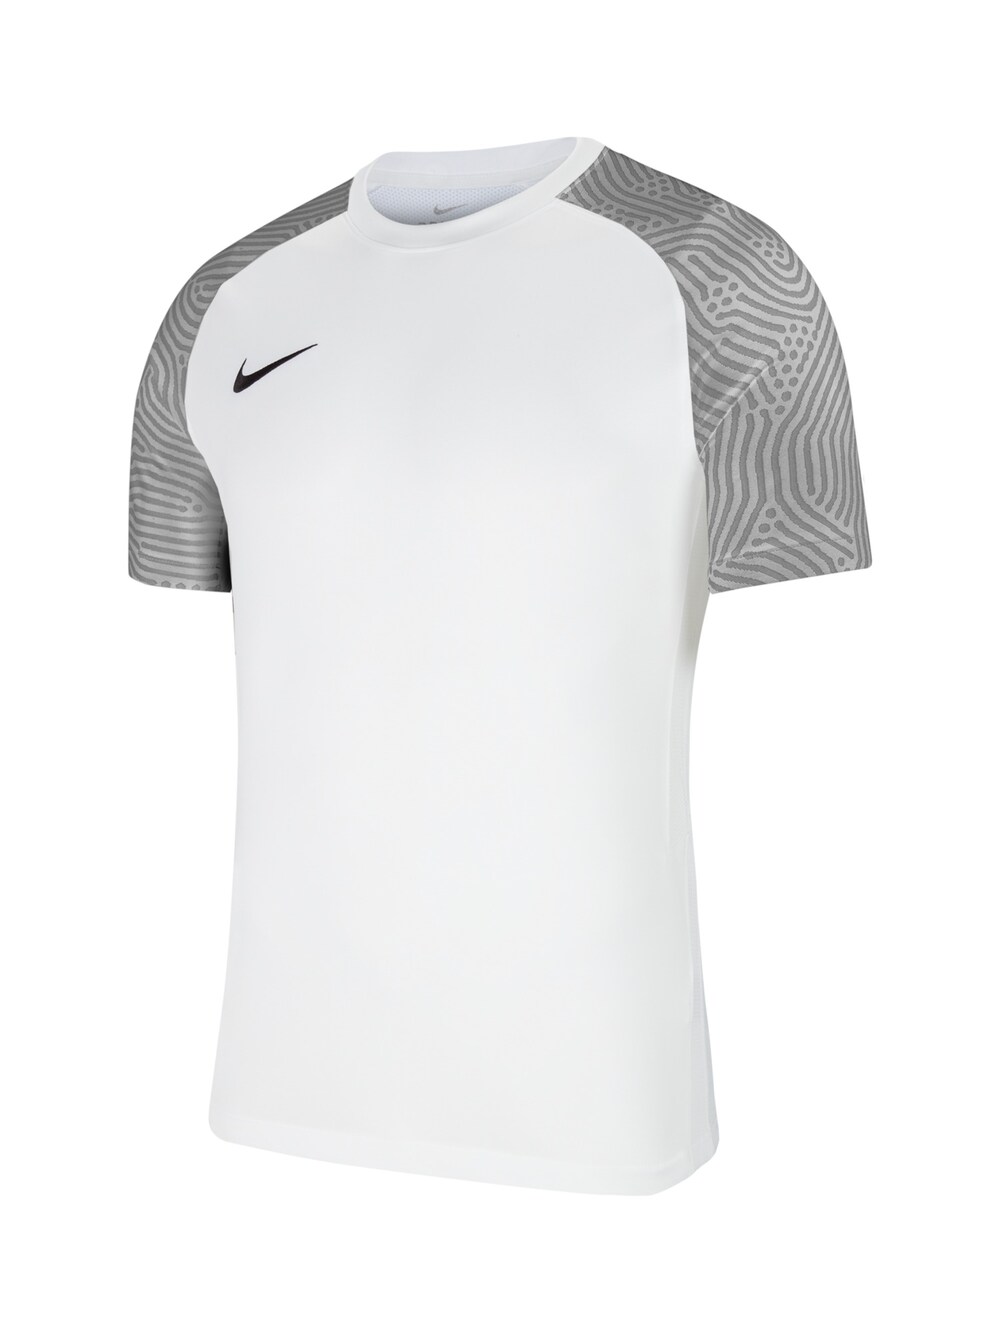 Рубашка для выступлений Nike Strike II, белый футболка игровая подростковая nike strike ii cw3557 100